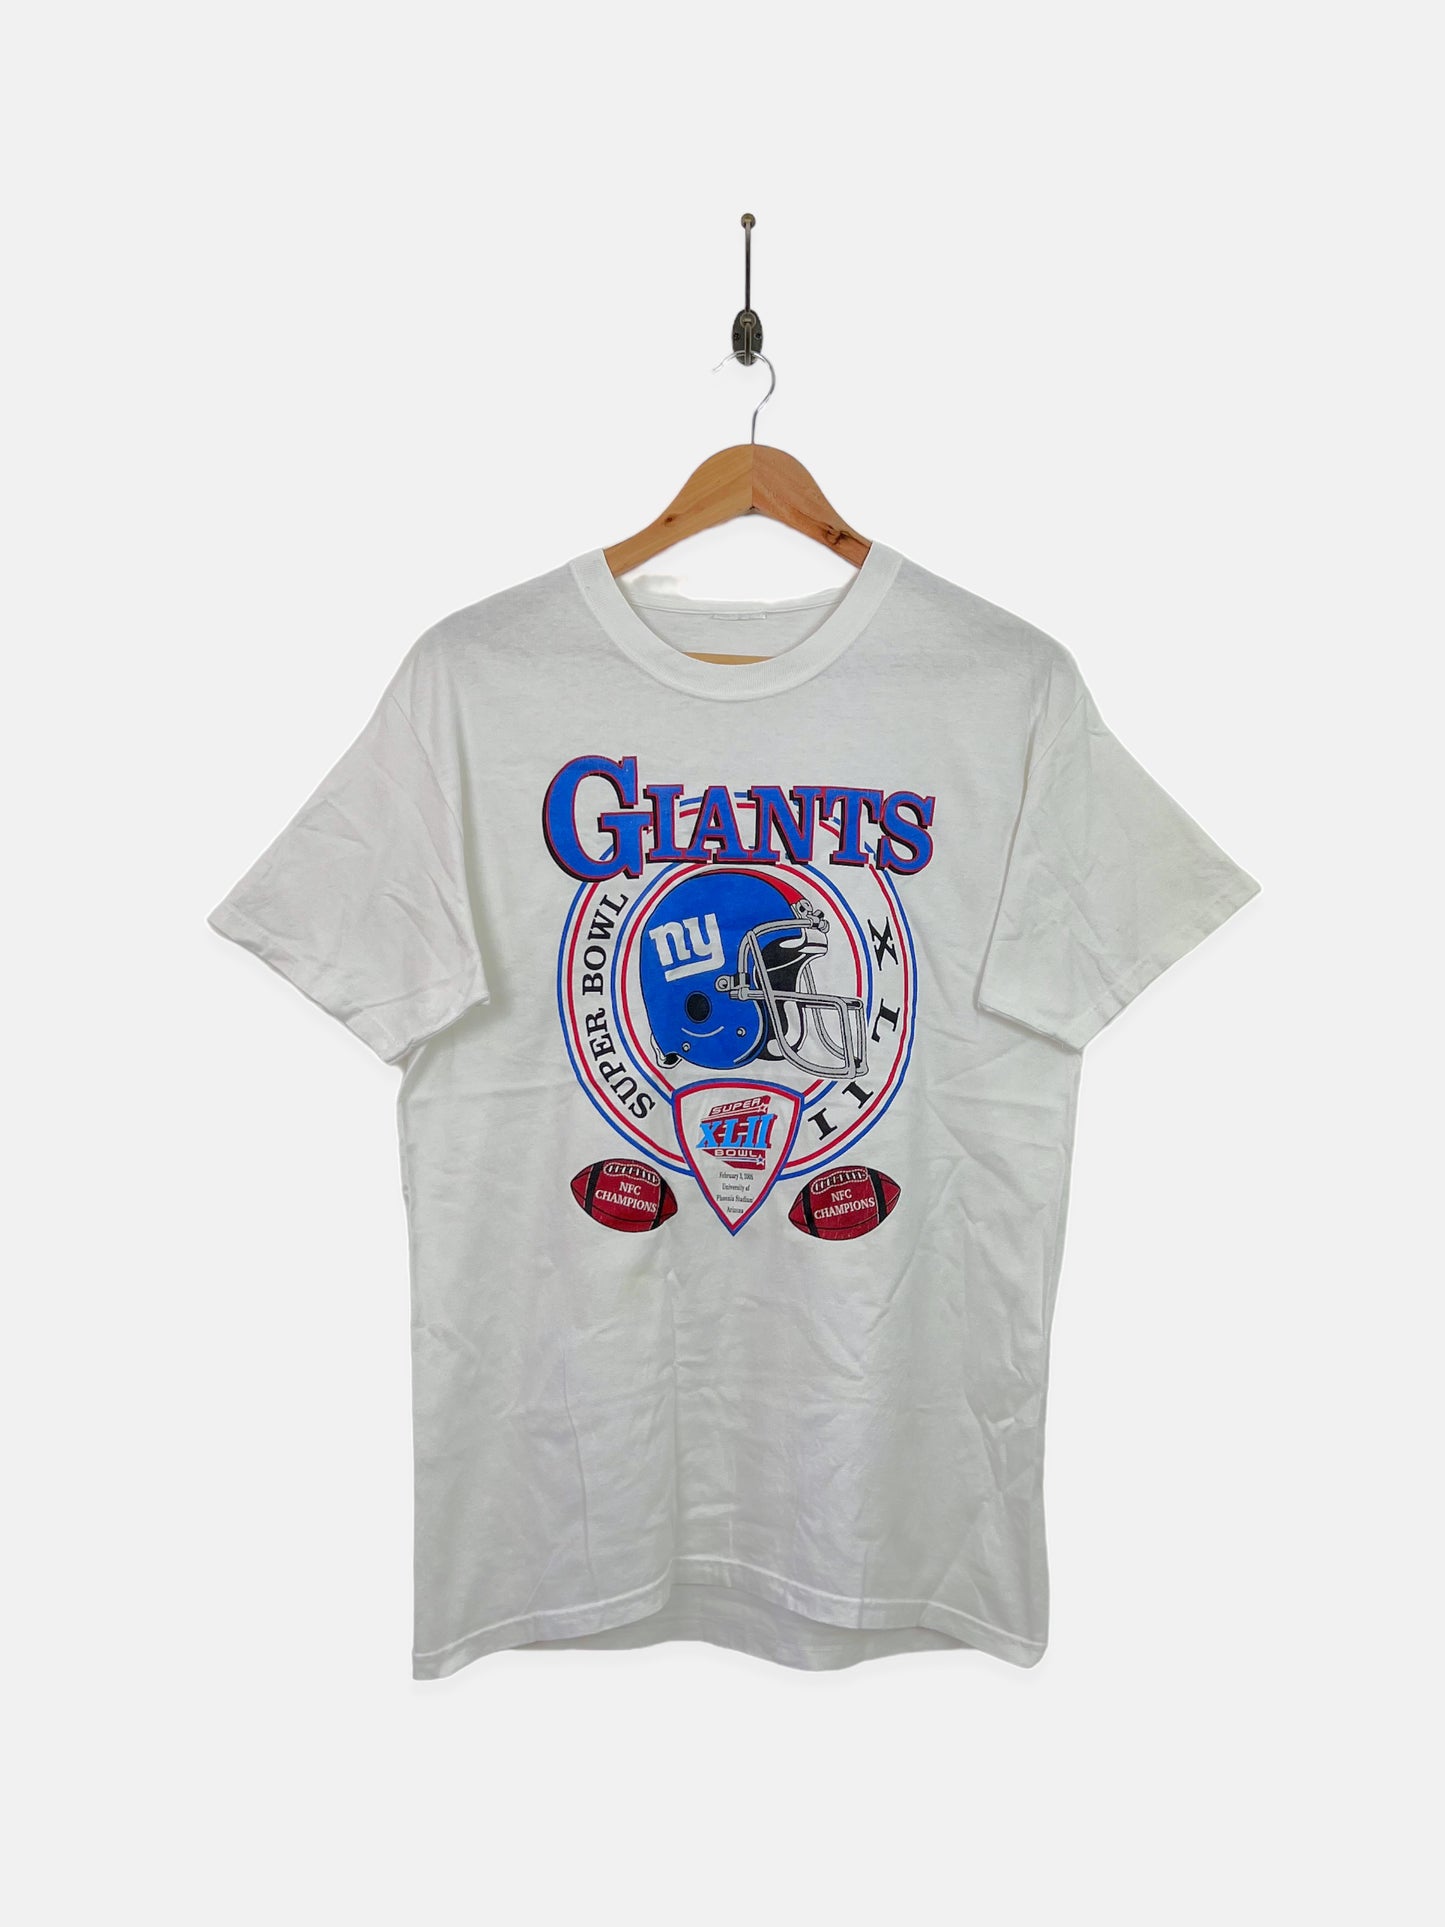 New York Giants NFL Vintage T-Shirt Size 10